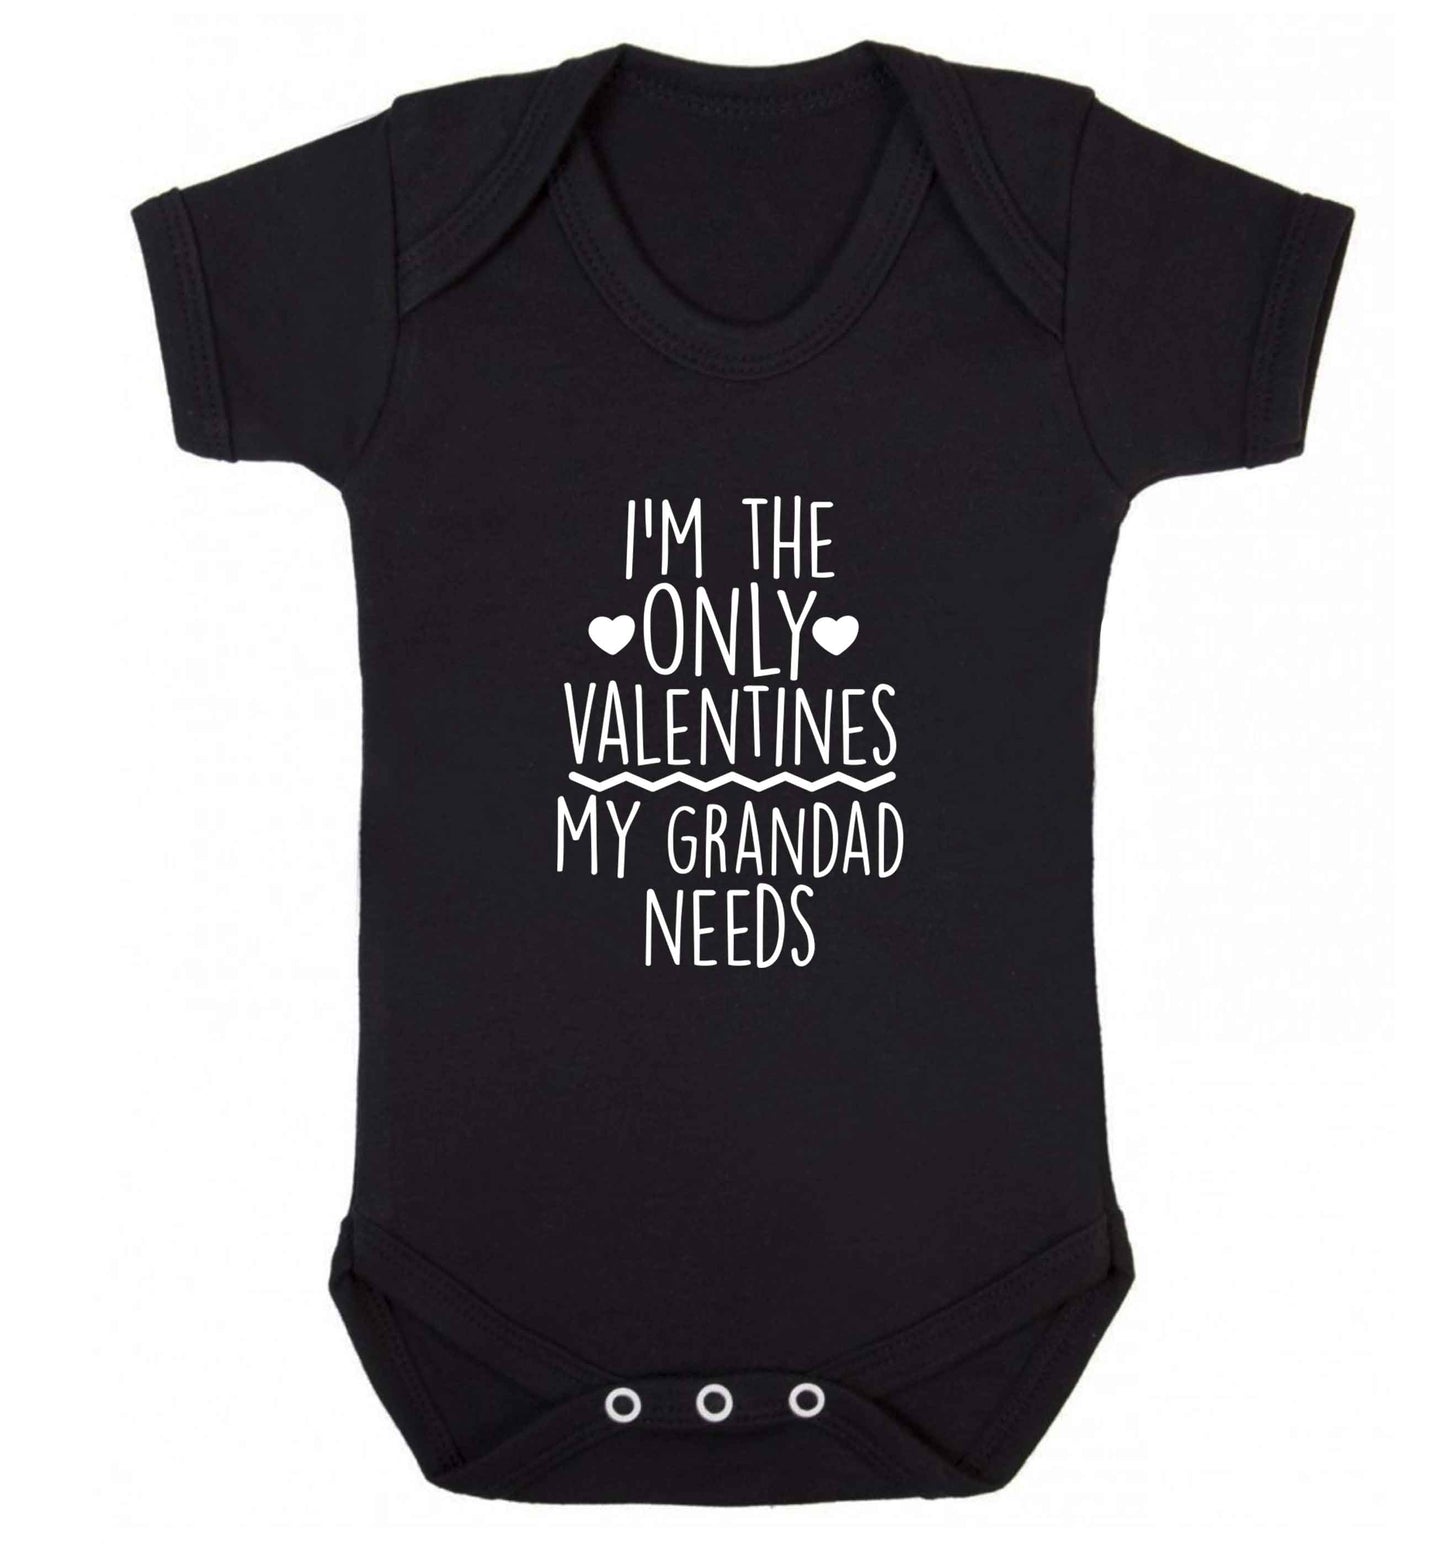 I'm the only valentines my grandad needs baby vest black 18-24 months